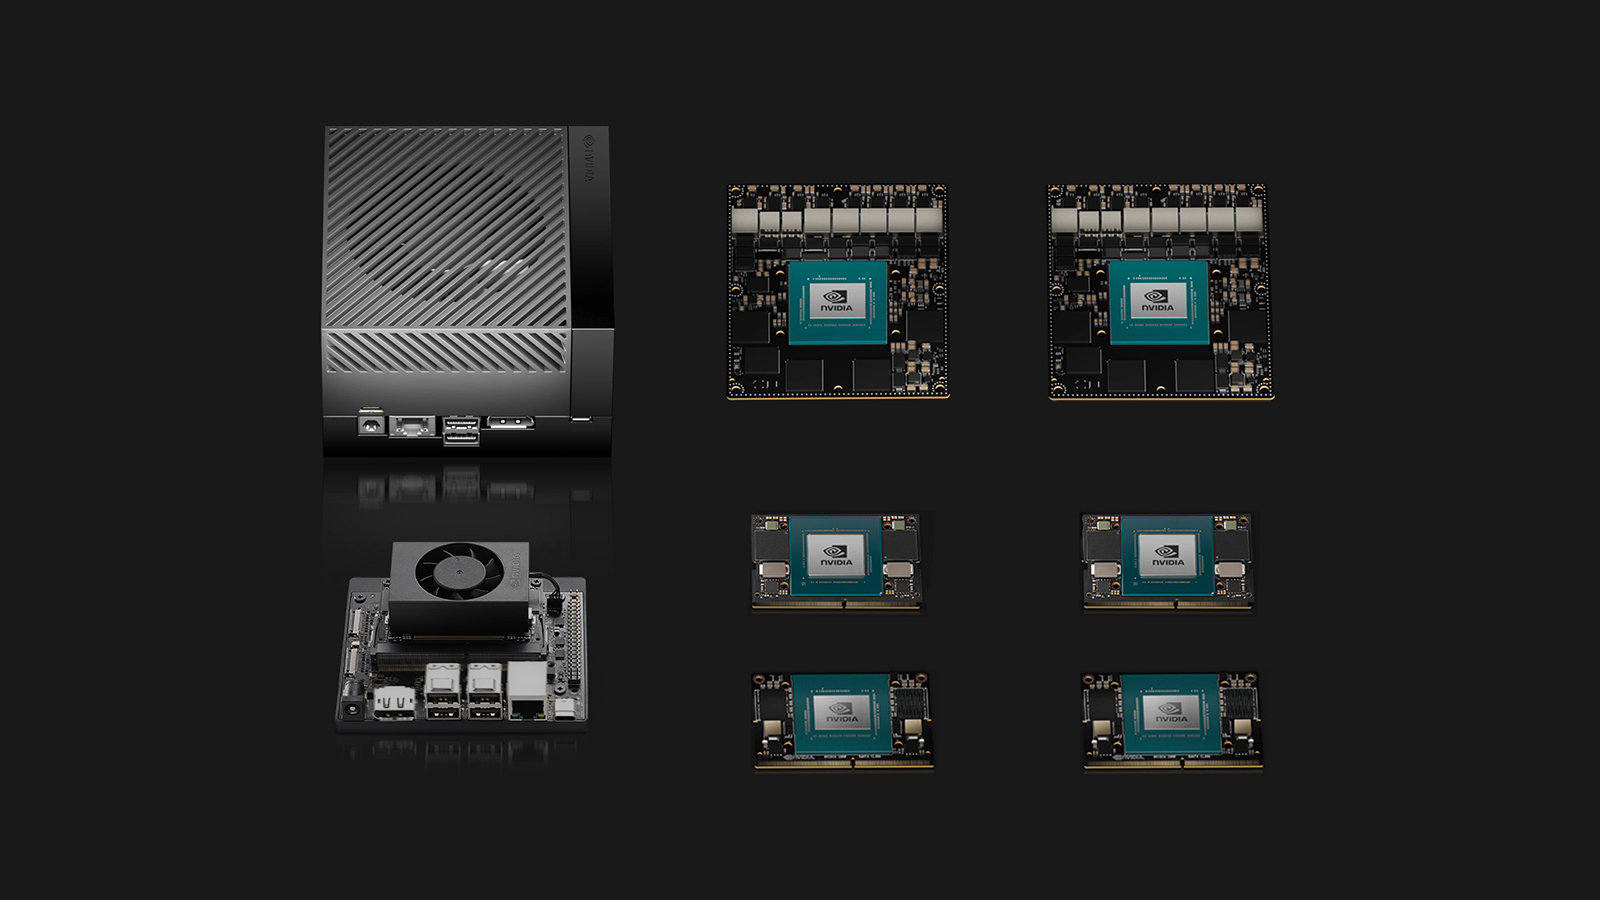 nvidia jetson orin full lineup now in production NVIDIA ขยายการเข้าถึงซอฟต์แวร์ Isaac และความพร้อมใช้งานของแพลตฟอร์ม Jetson เร่งความเร็วหุ่นยนต์จากคลาวด์สู่ Edge